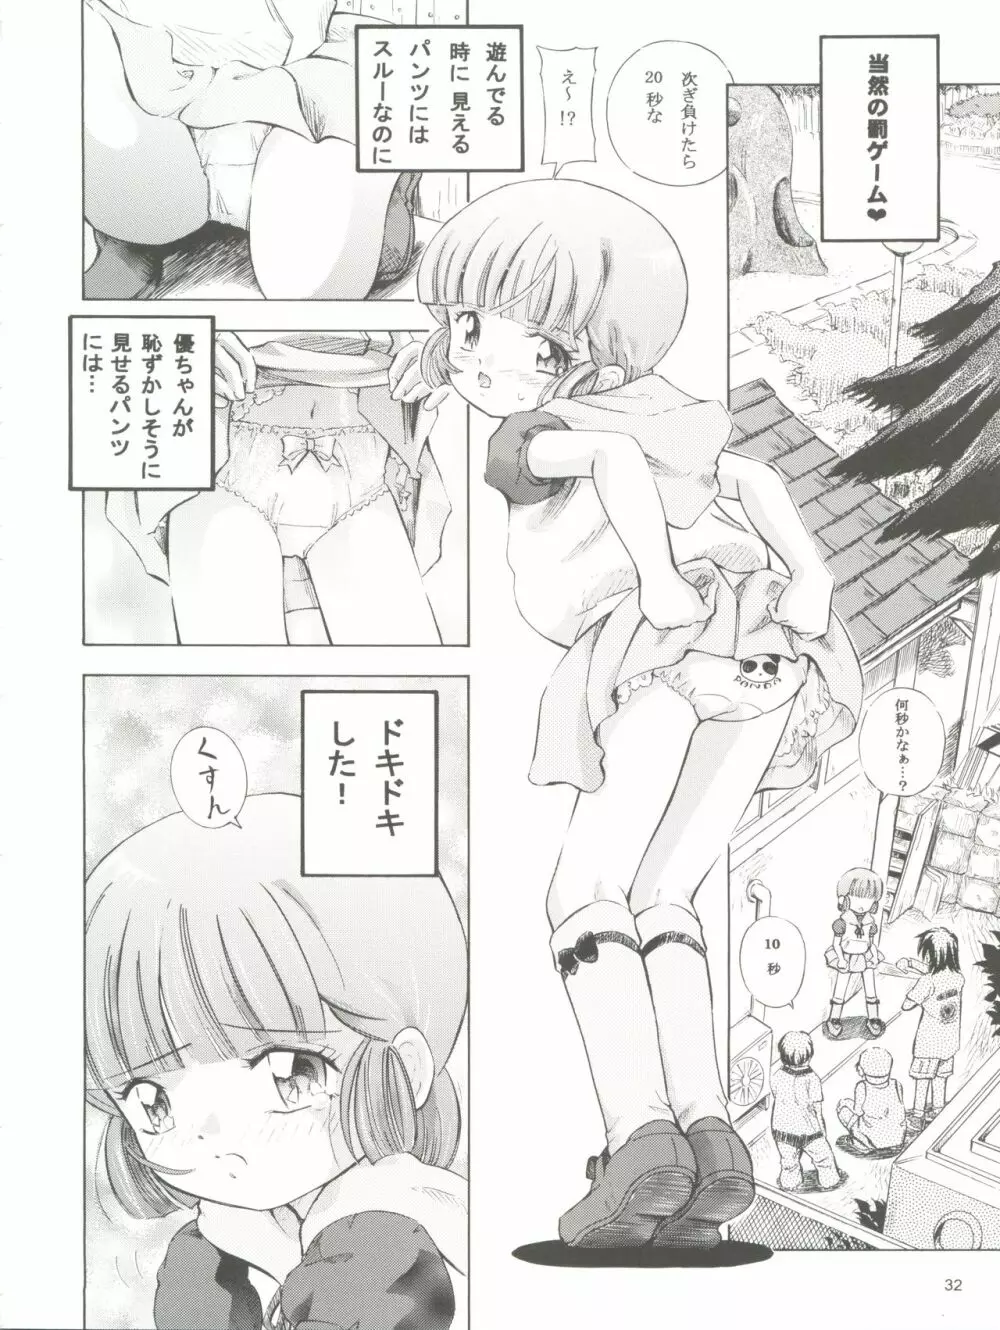 魔法旧式 17 魔女っ子丼! - page32